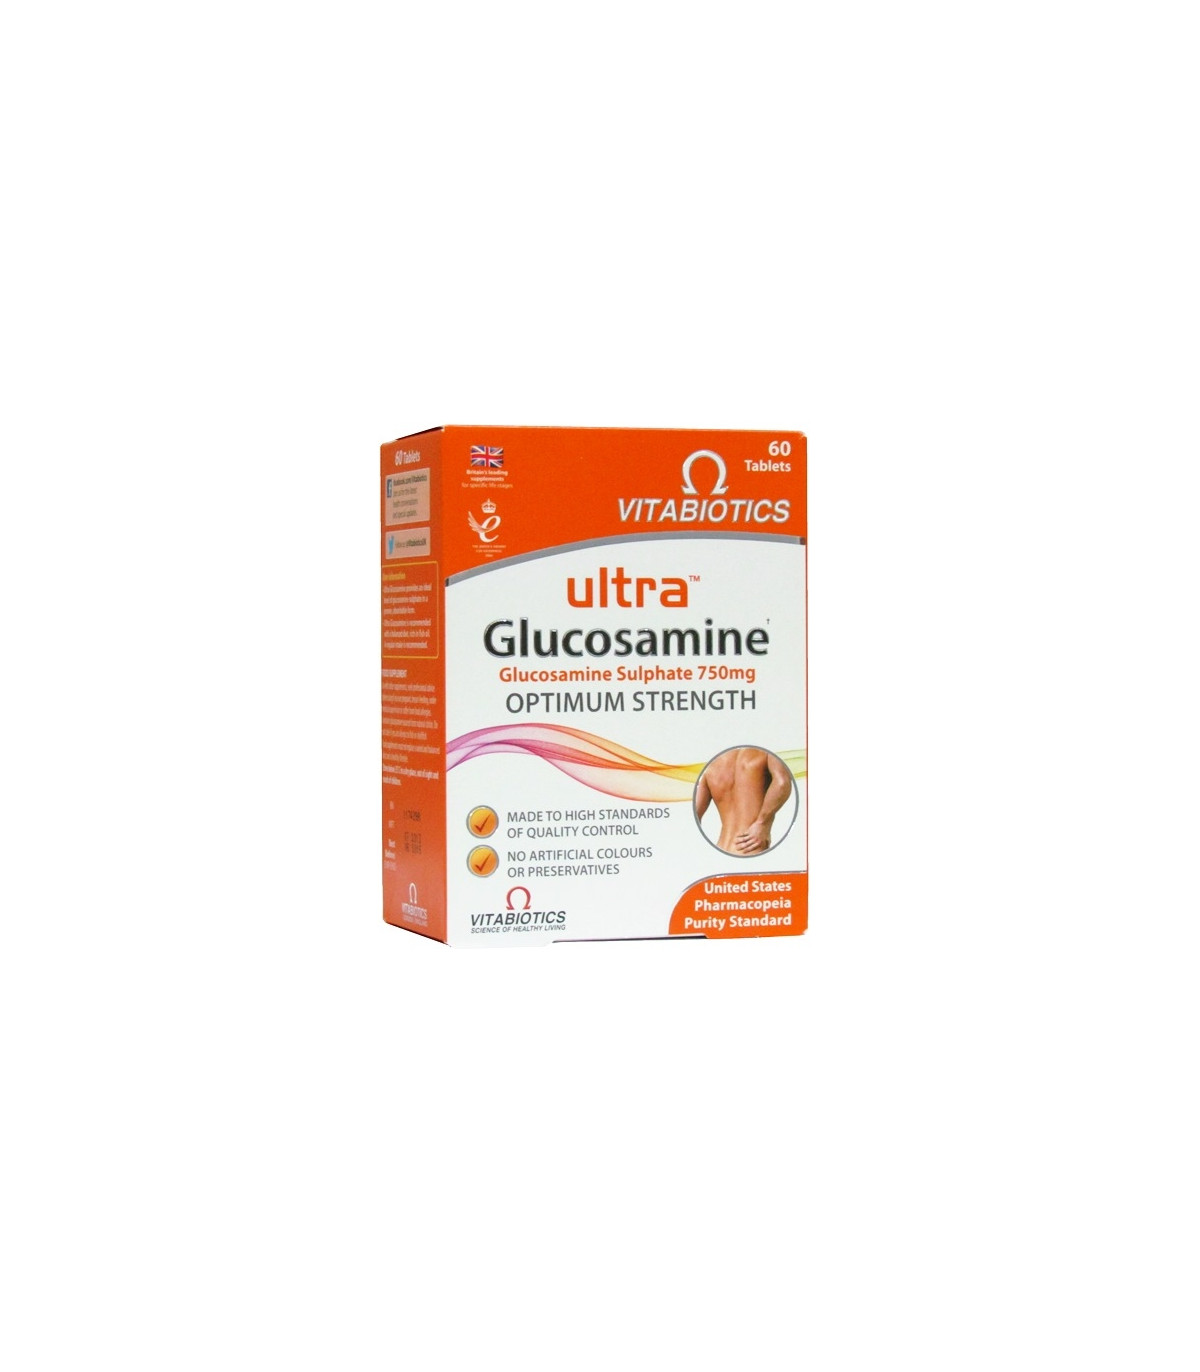 Ultra Glucosamine 750mg Optimum Strength - 60 Tablets